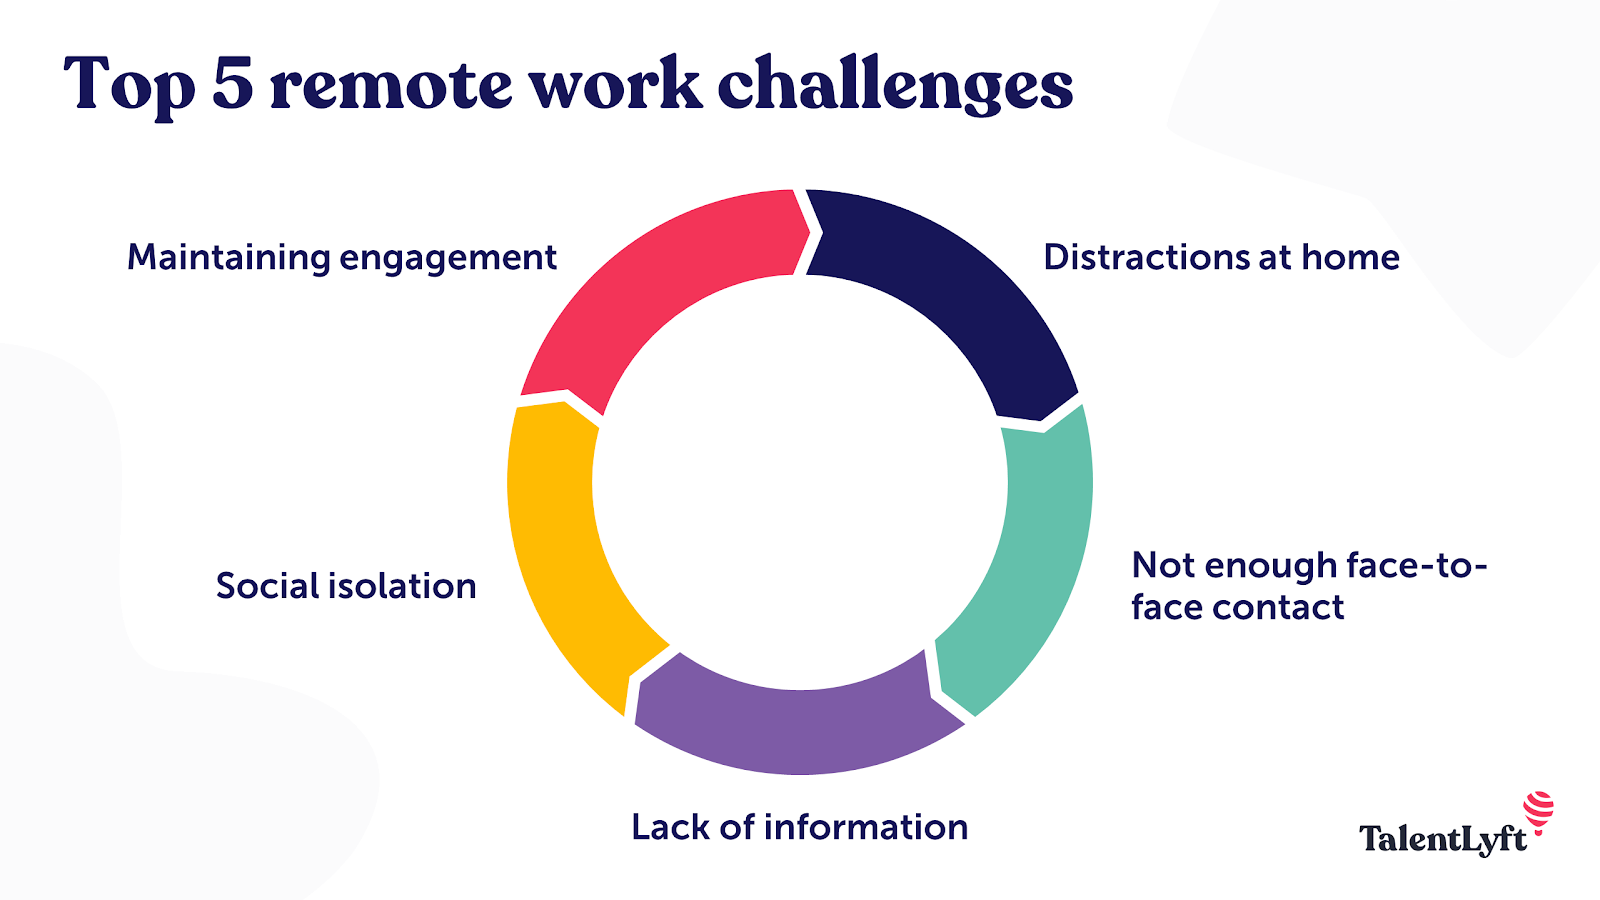 Top 5 remote work challenges